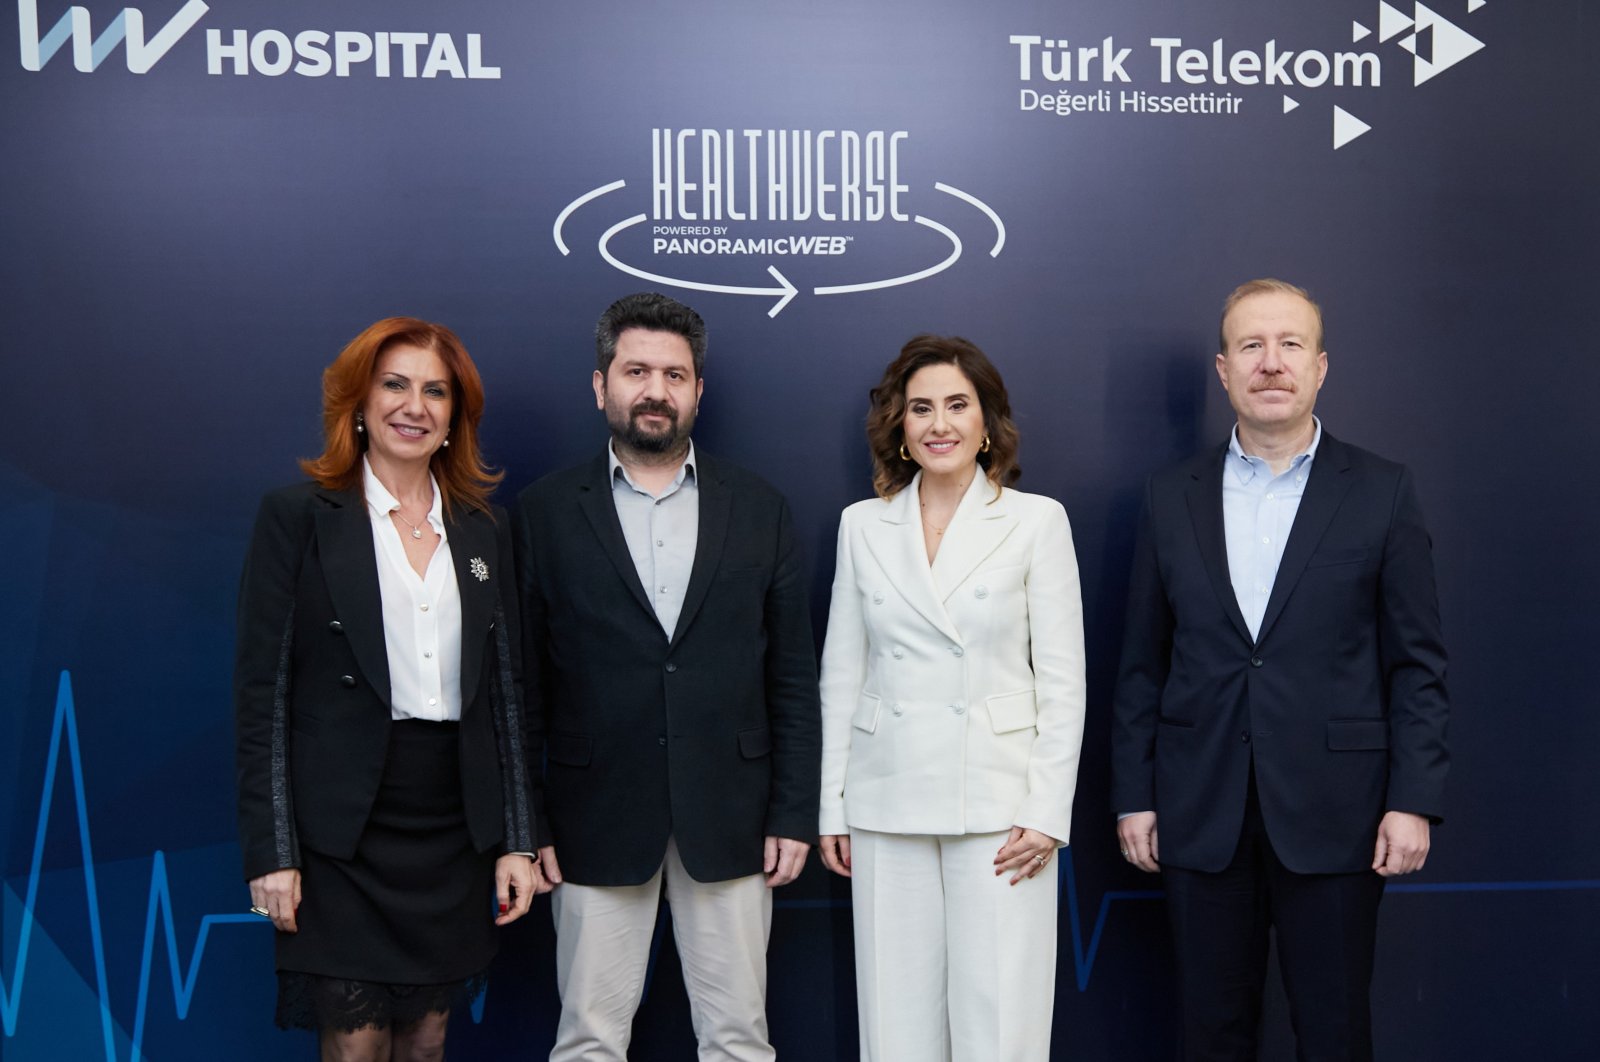 From left, Liv Hospital Group Coordinator Meri İstiroti, Ulaş Aksan and Beliz Teoman Ünay, co-founders of Healthverse PanoramicWEB, and Türk Telekom Corporate Sales Deputy General Manager Mustafa Eser. (Courtesy of Türk Telekom)